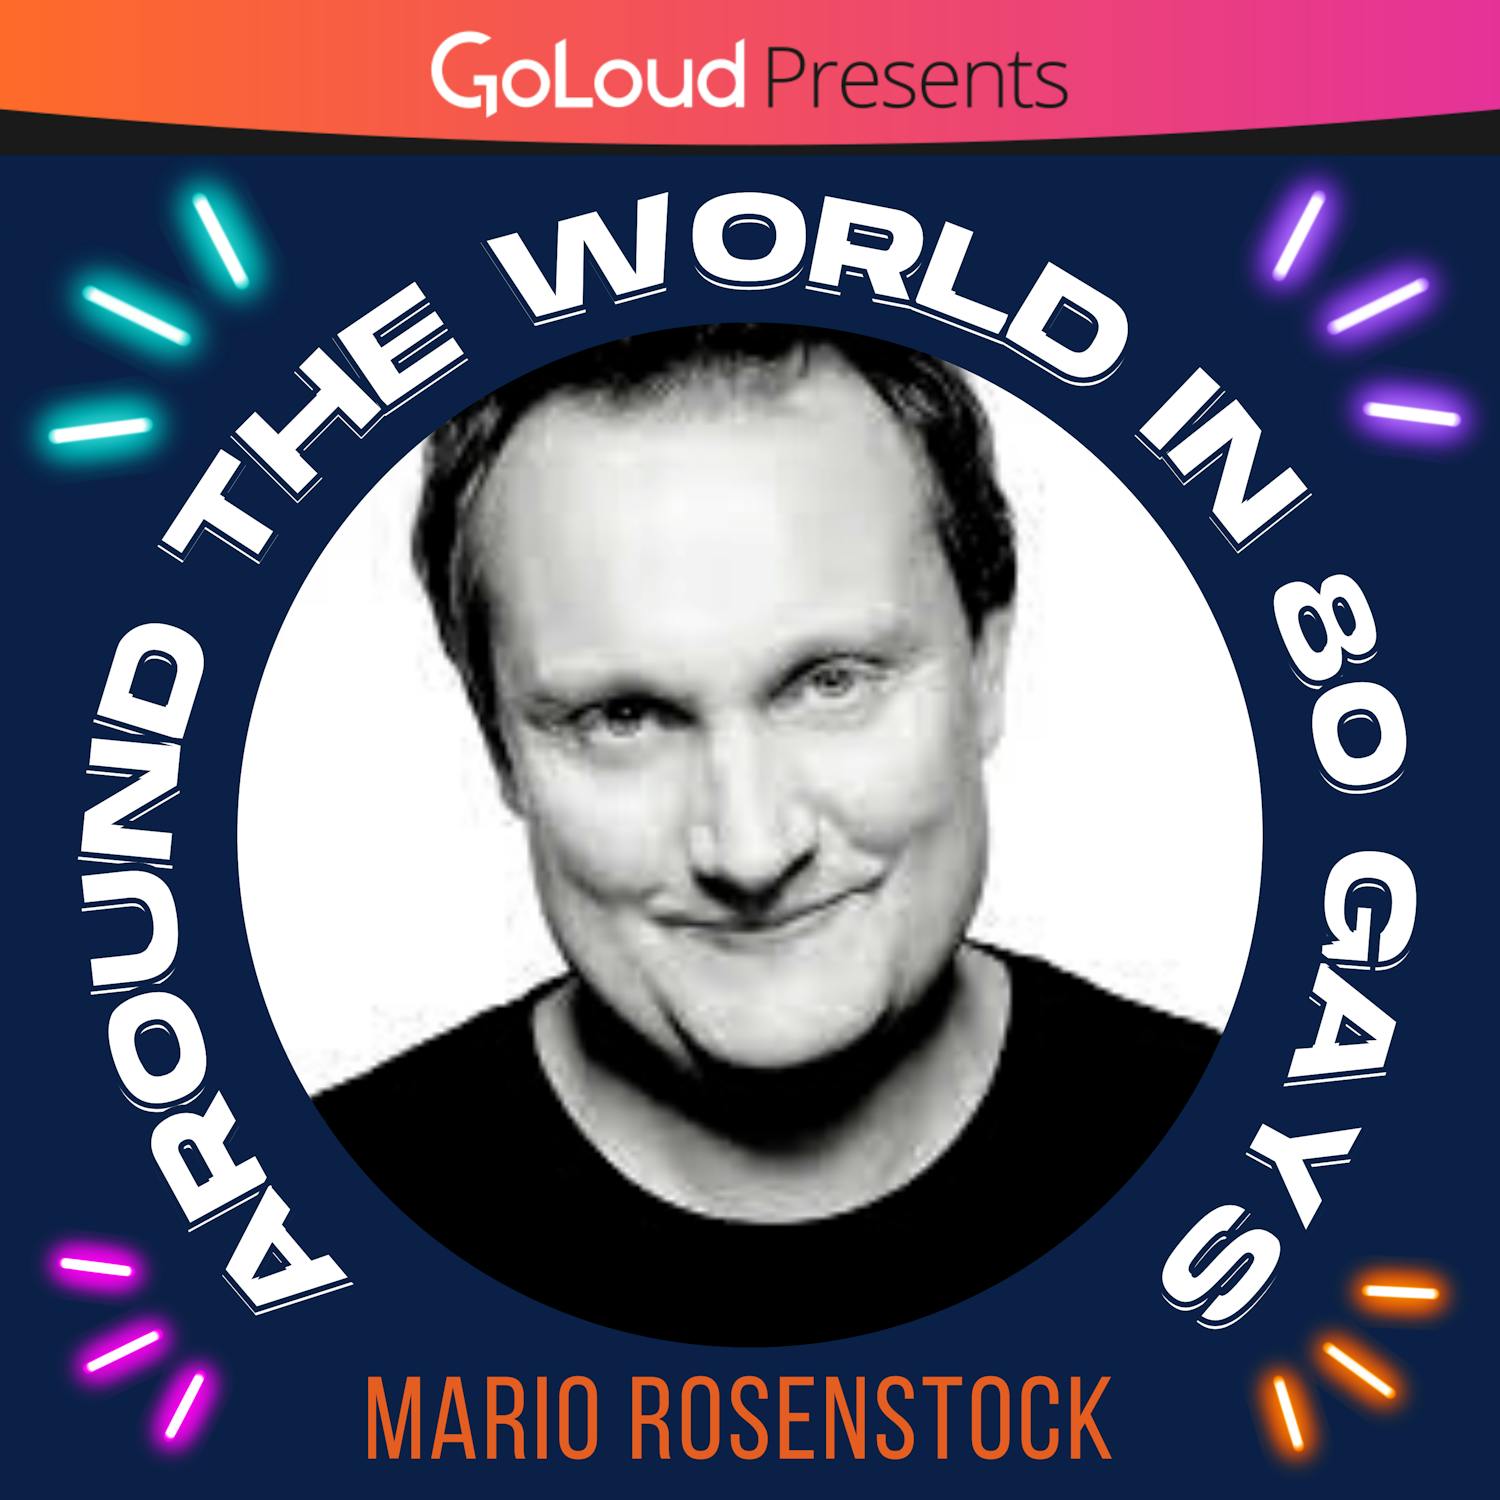 Around the World in 80 Gays meets Mario Rosenstock